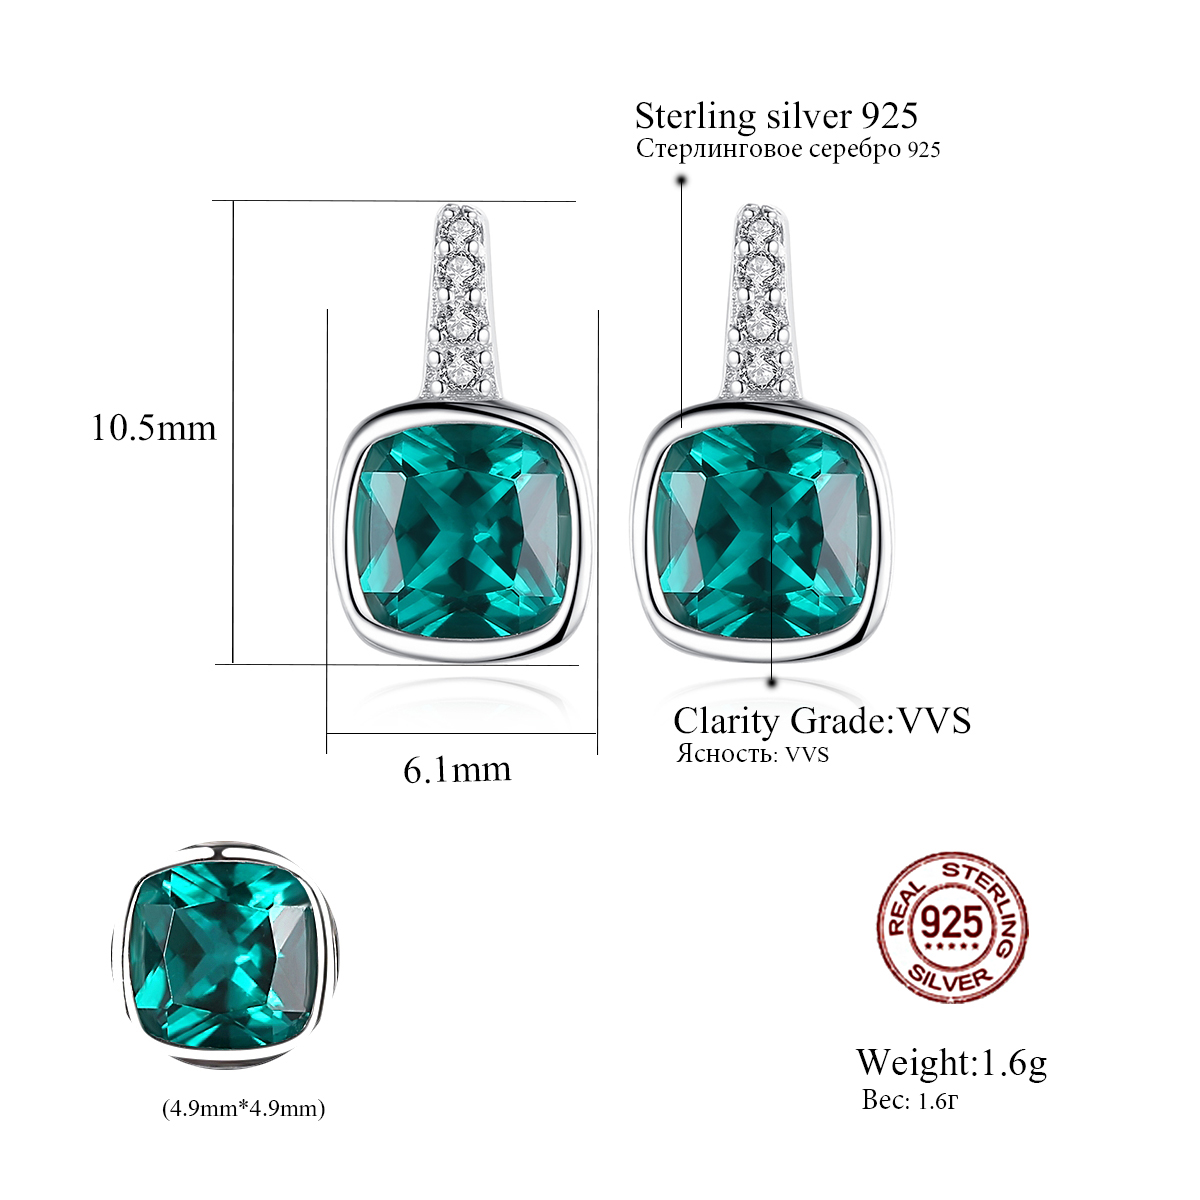 Big Square Green Gemstone Sterling Silver Stud Earring